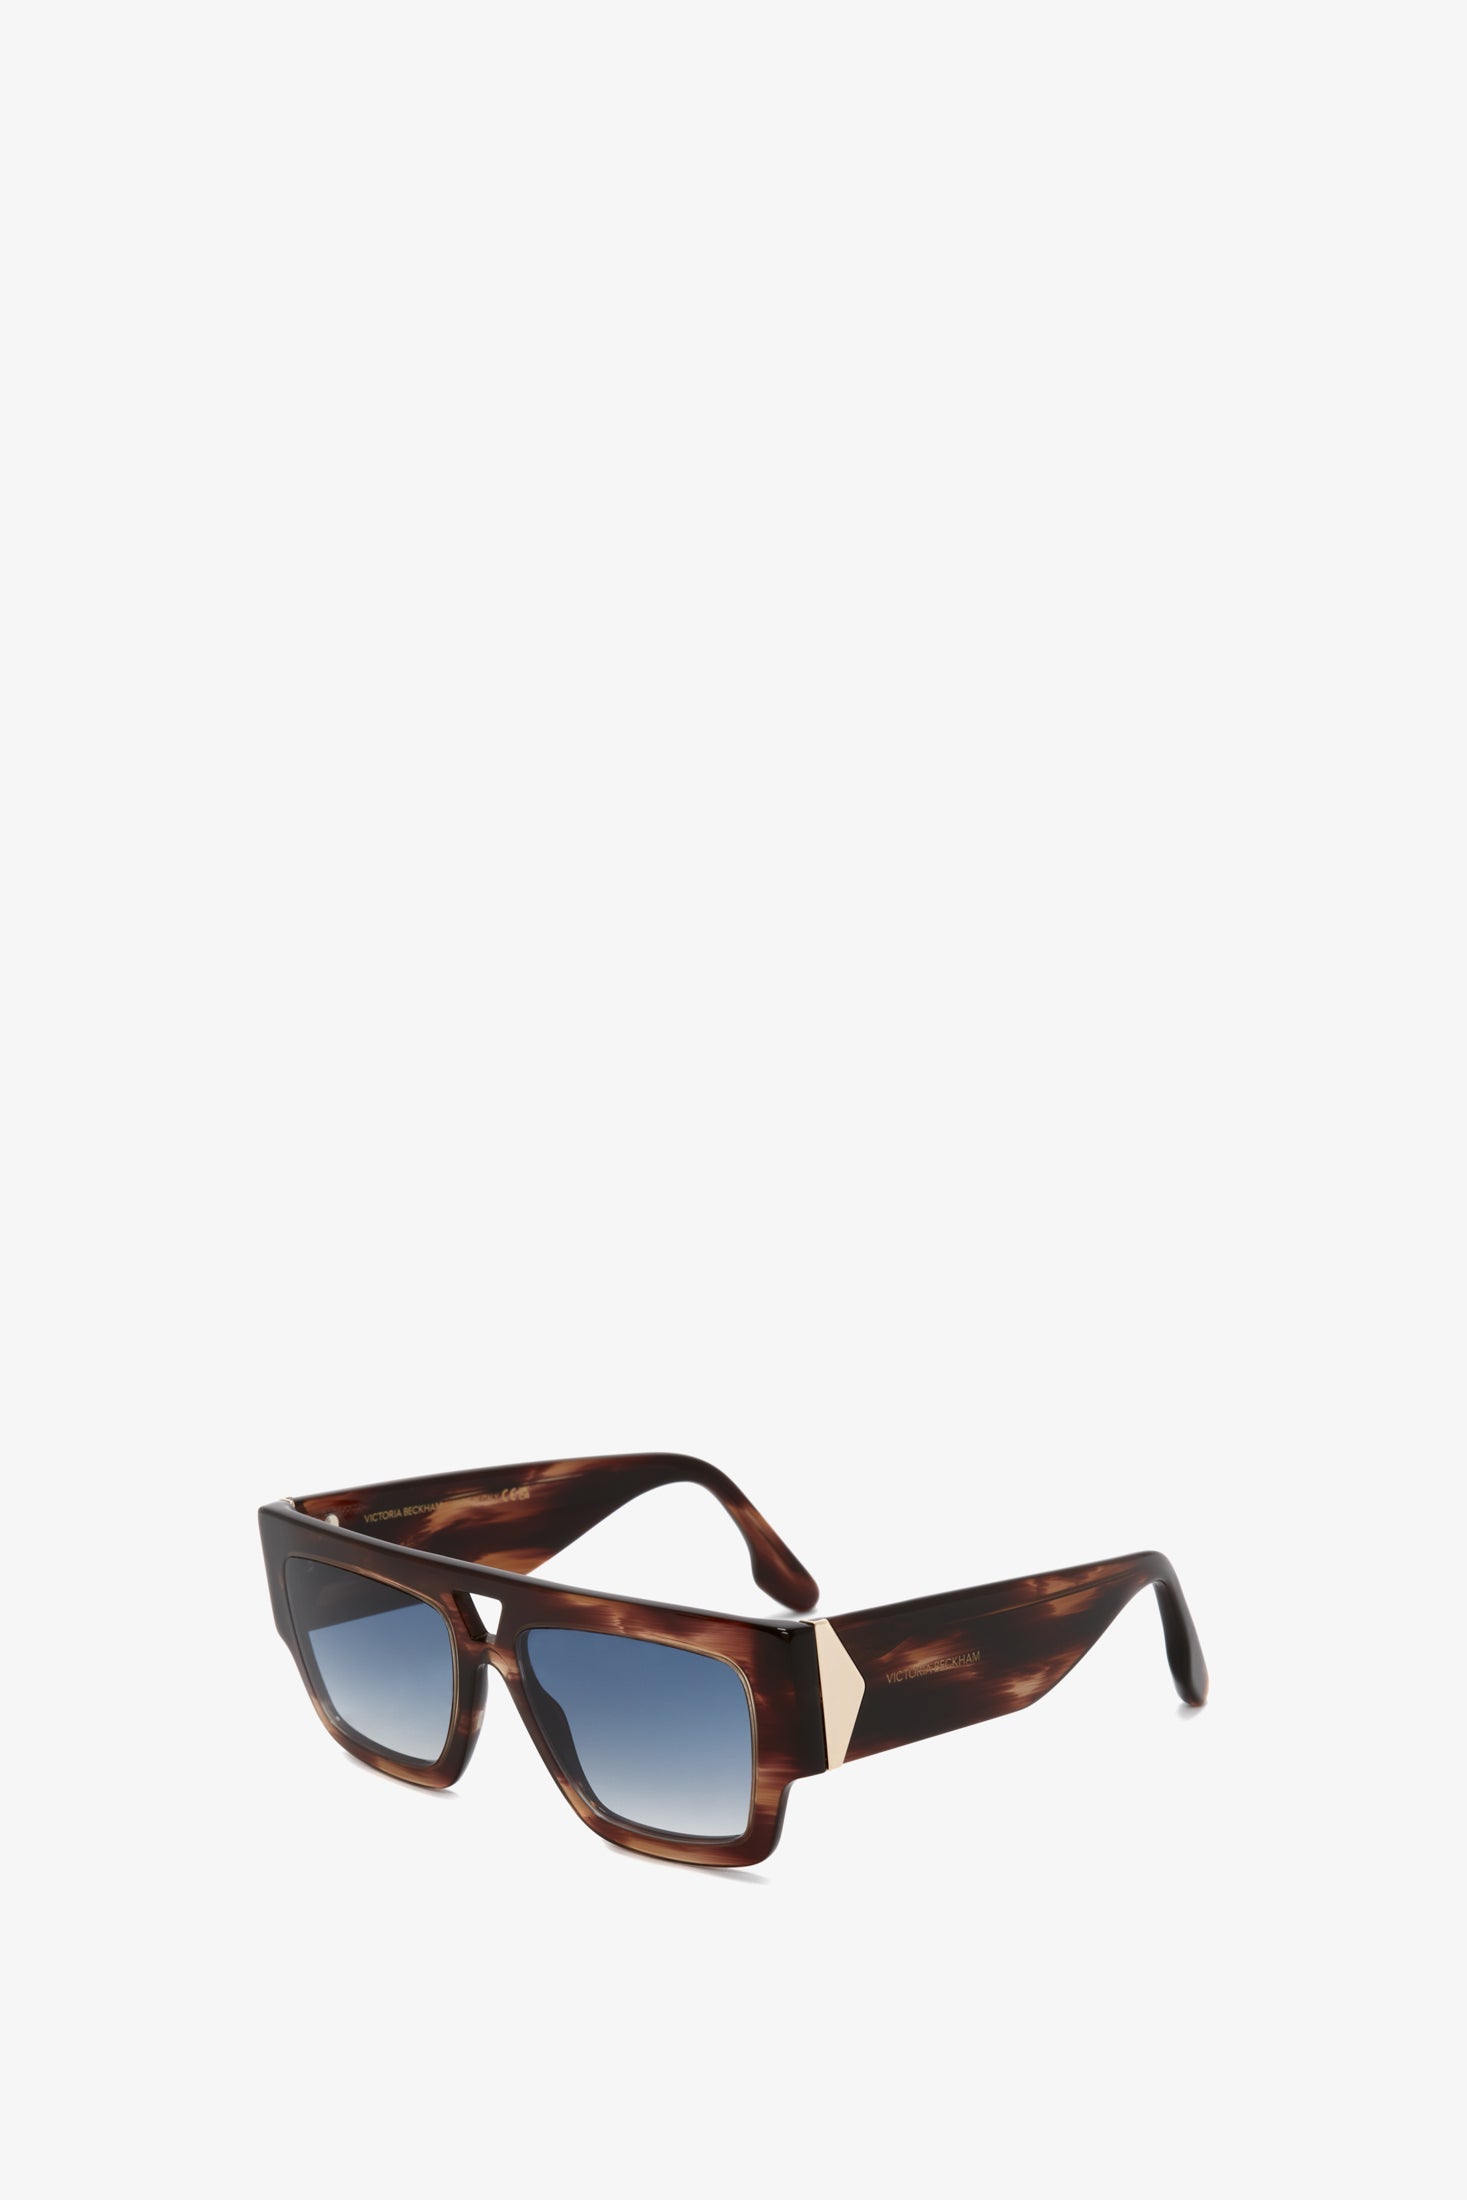 Ray-Ban RB4122 50 Brown & Black Polarized Sunglasses | Sunglass Hut USA